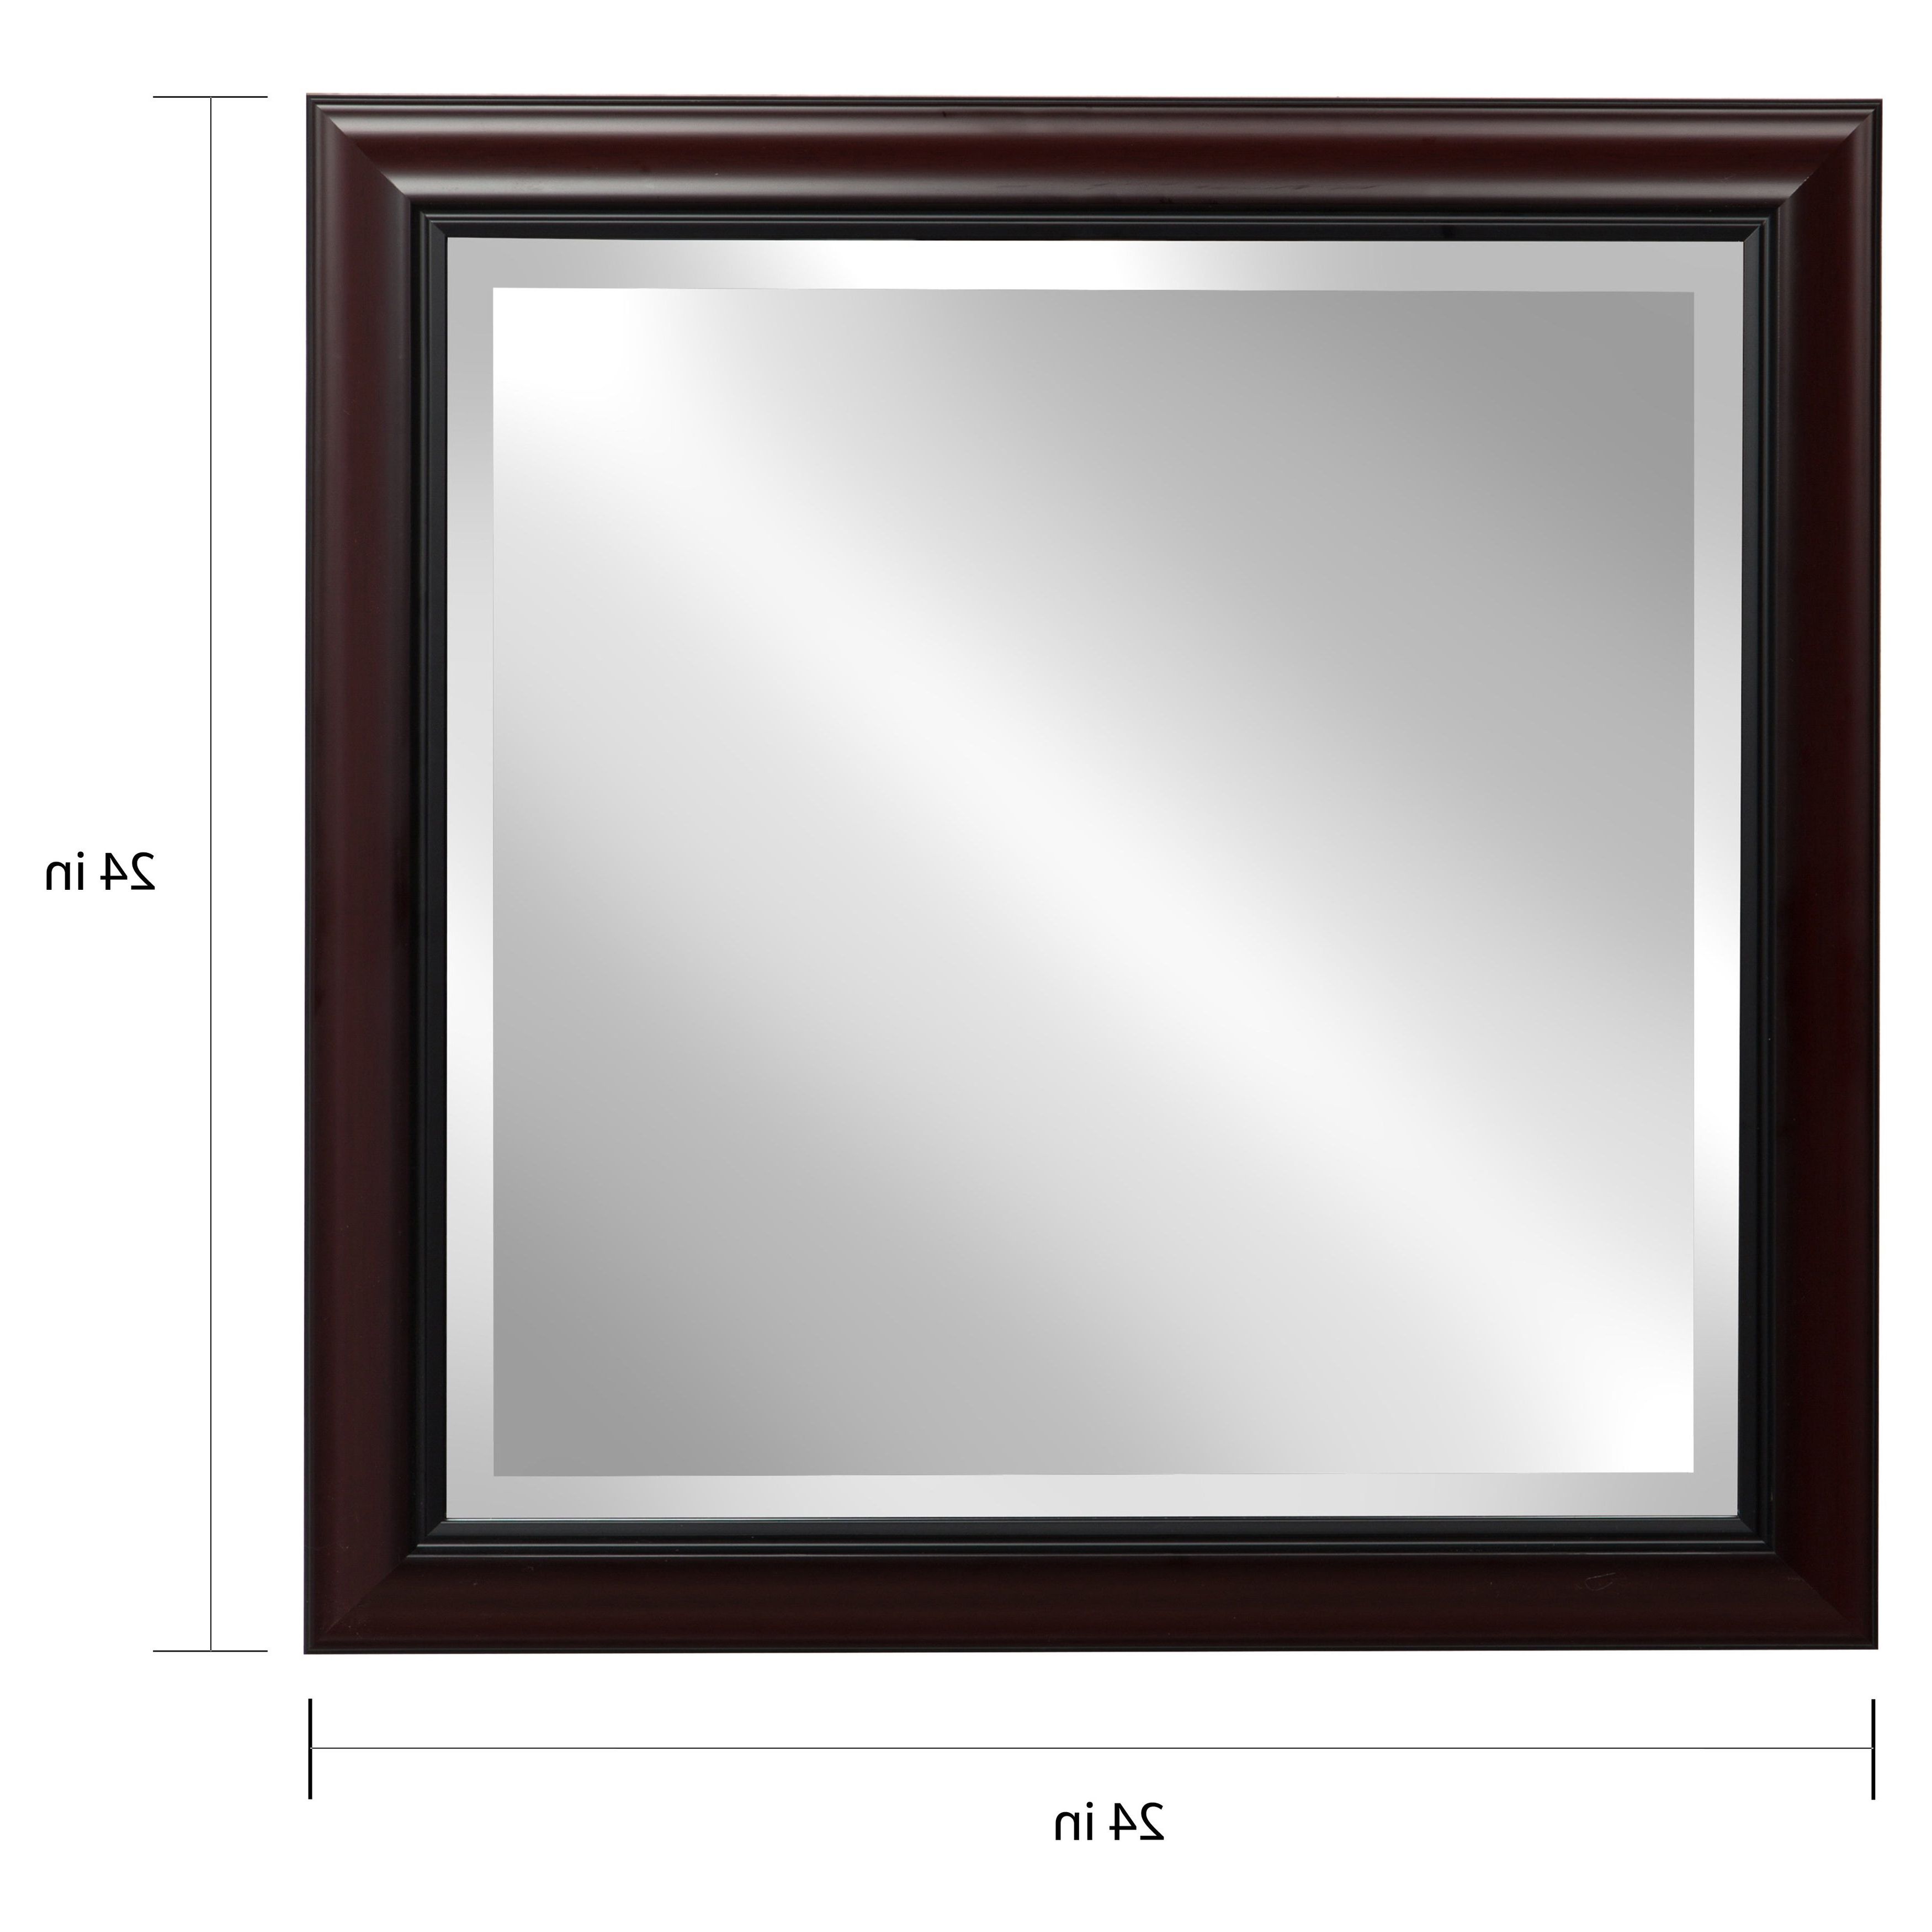 Popular Designovation Dalat Cherry Framed Beveled Wall Mirror Regarding Cherry Wood Framed Wall Mirrors (View 4 of 20)